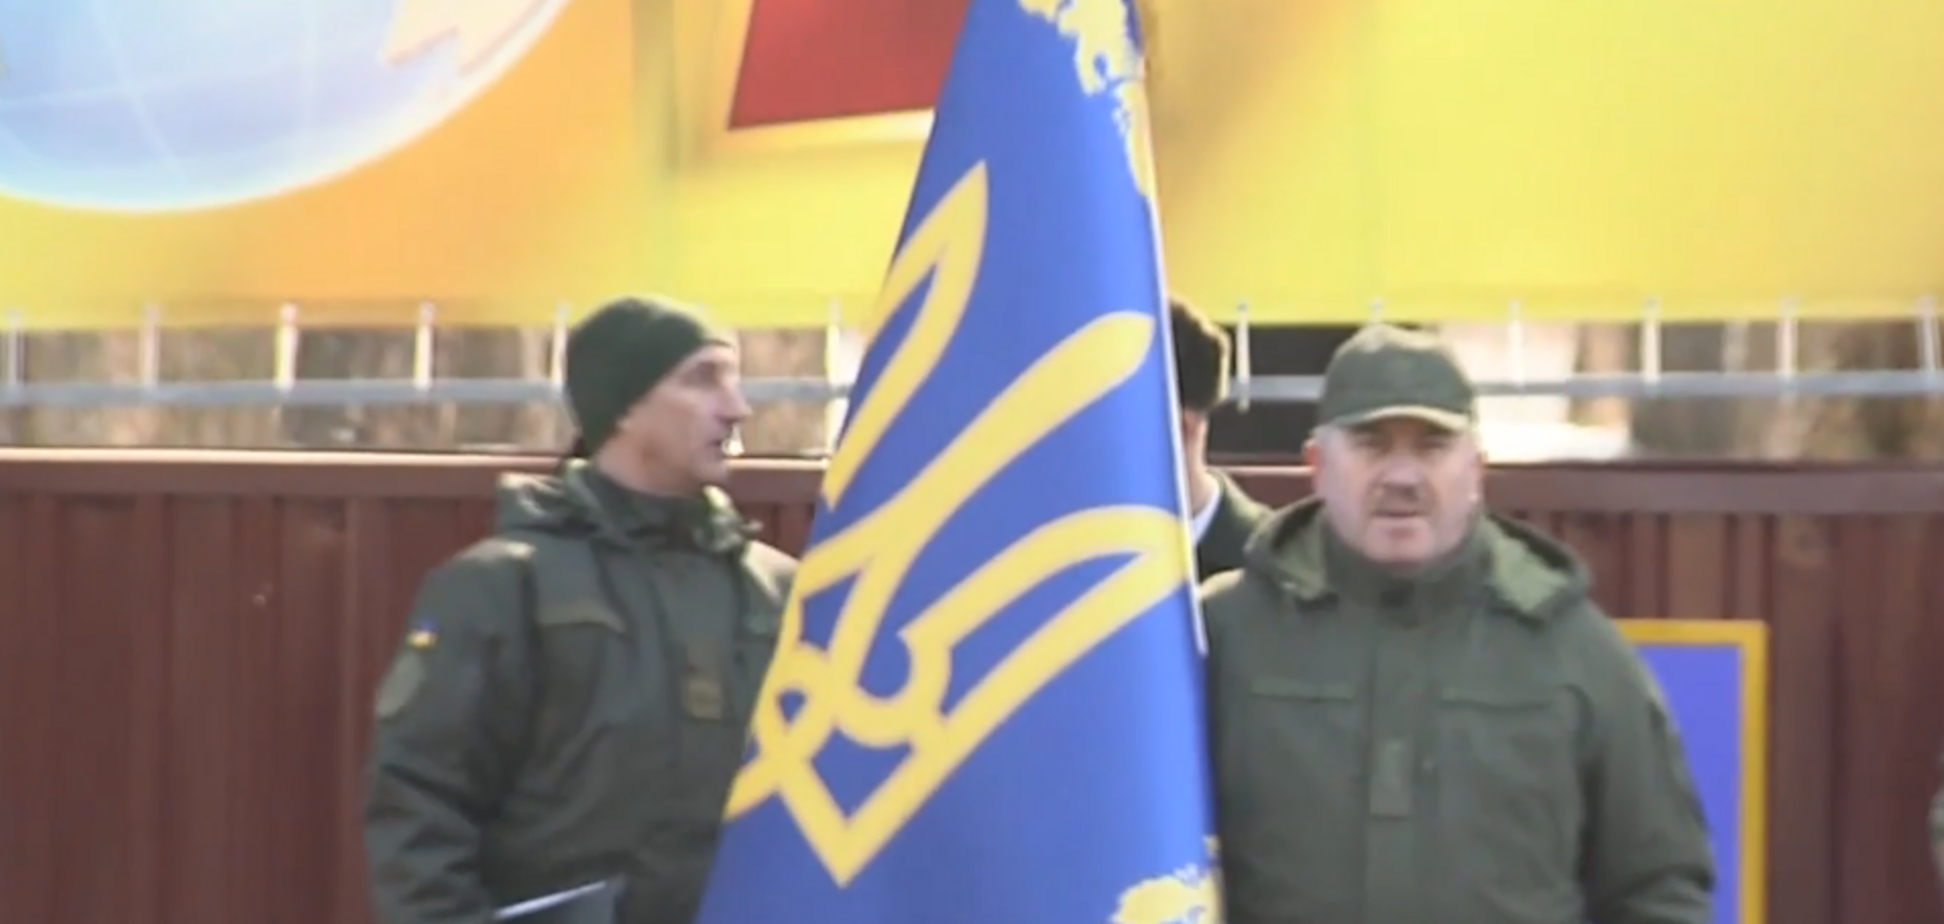 Рухнул с президентским штандартом в руках: солдату караула стало плохо на глазах у Порошенко